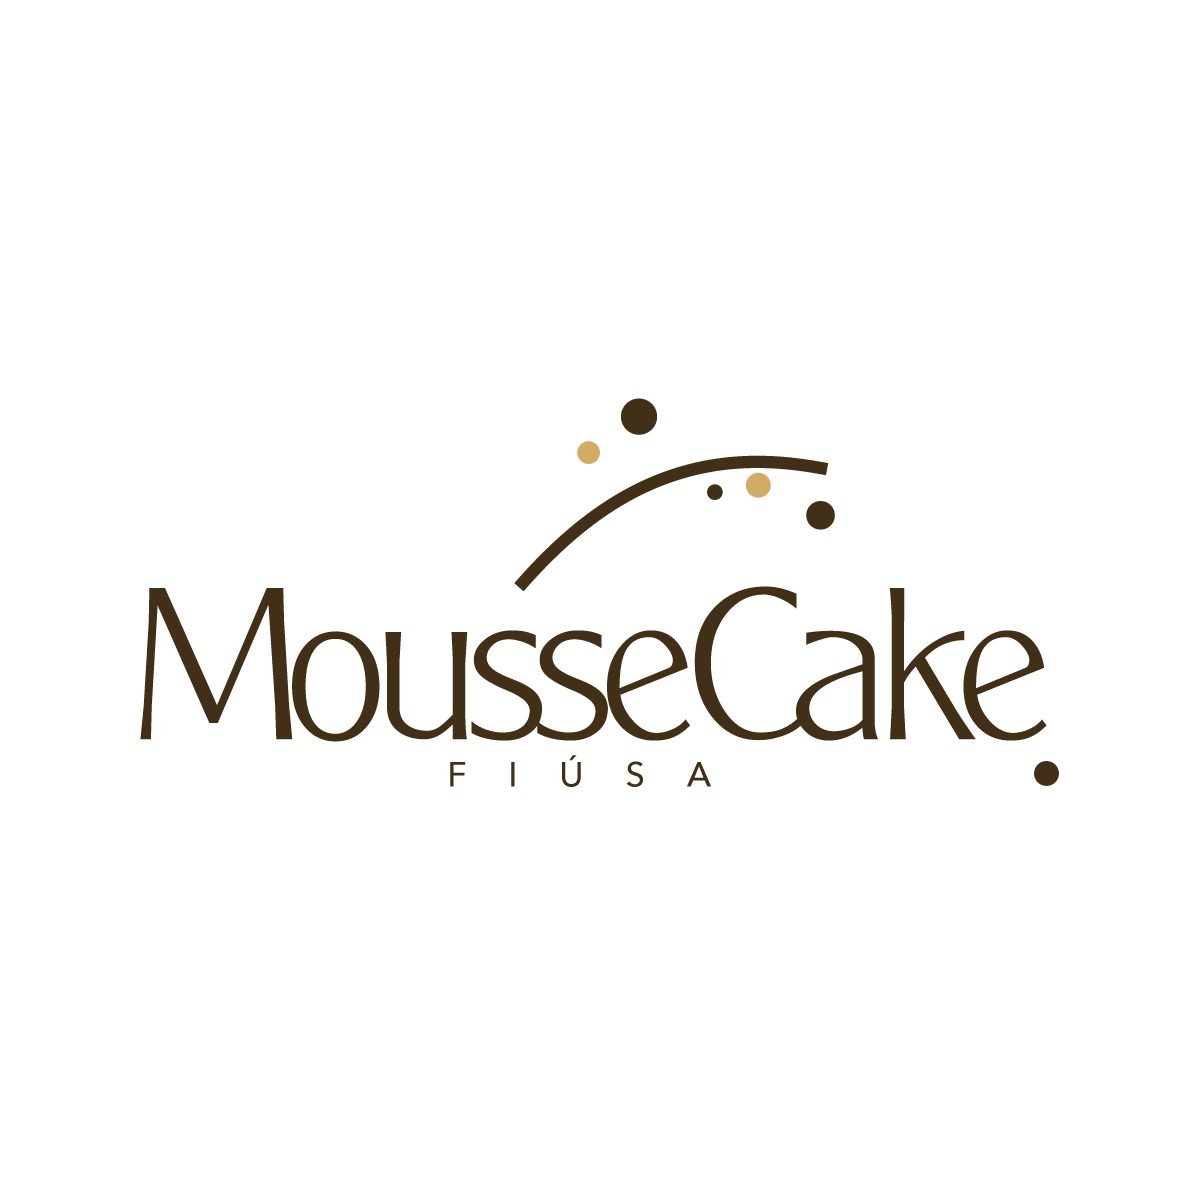 Mousse Cake Fiúsa